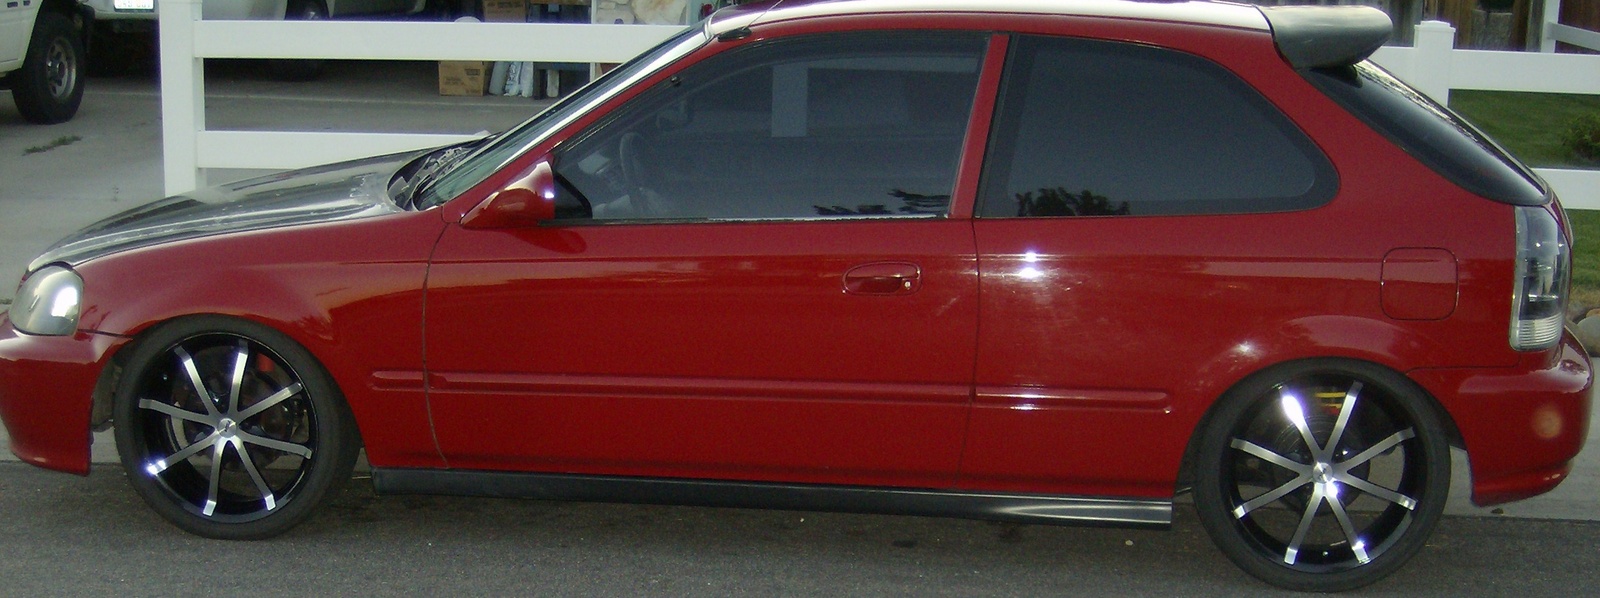 2000 Honda civic cx hatchback reviews